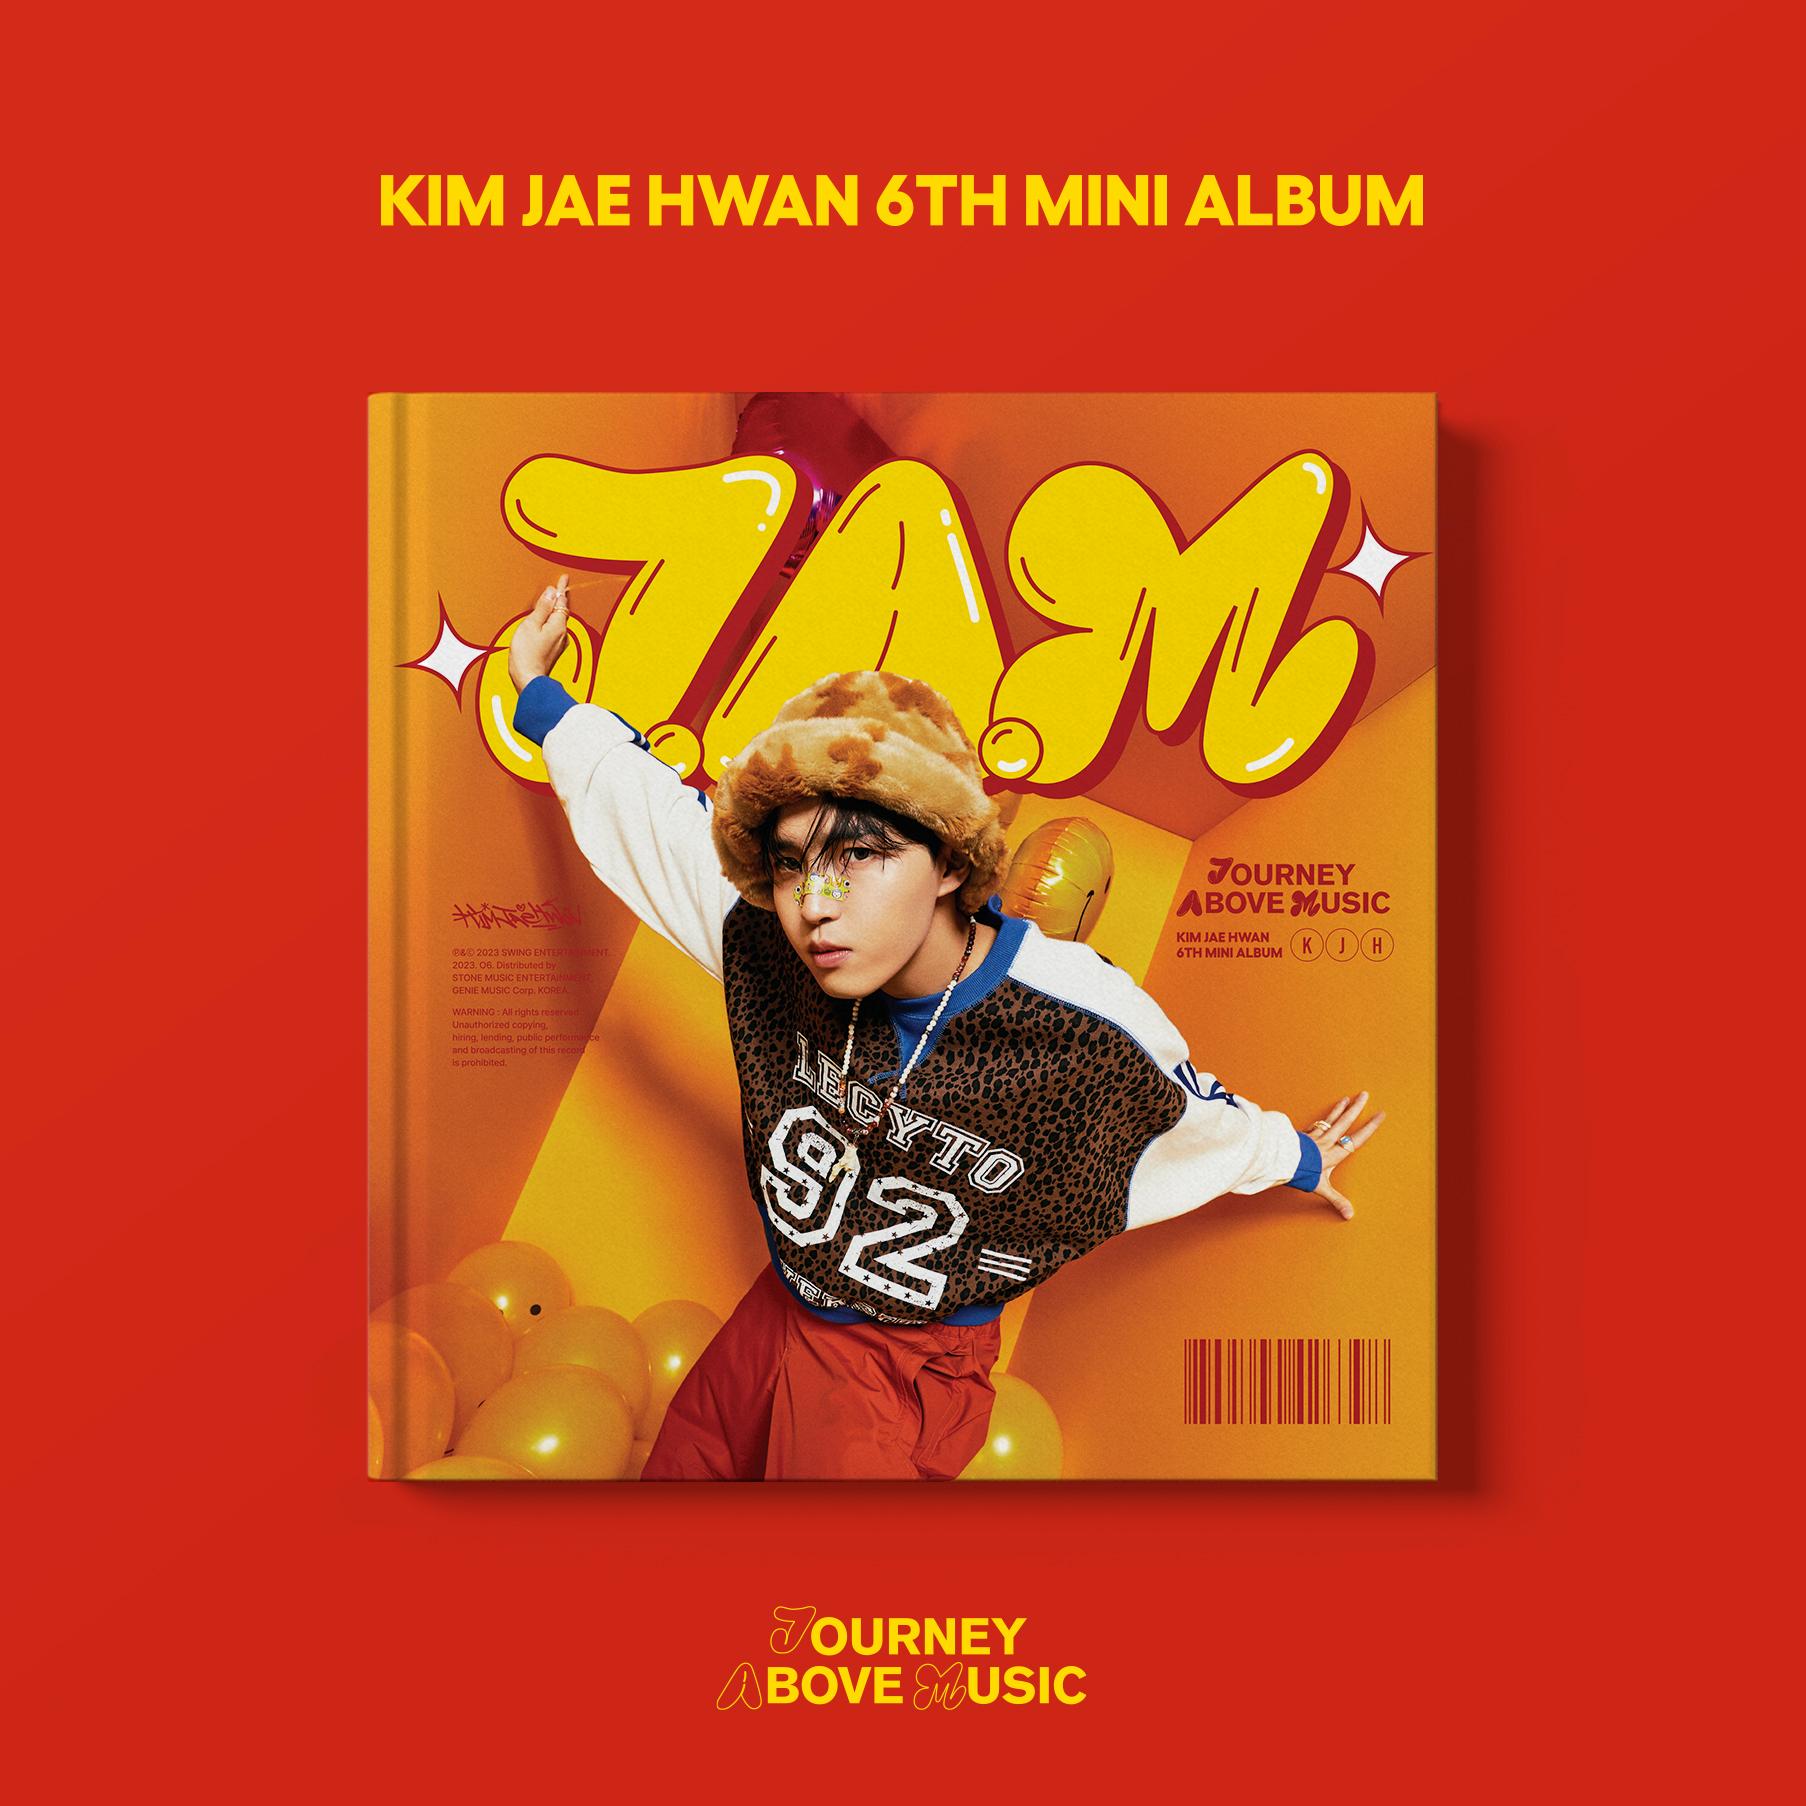 [Video Call Sign Event] KIM JAE HWAN - 6th Mini Album [J.A.M (Journey Above Music)]